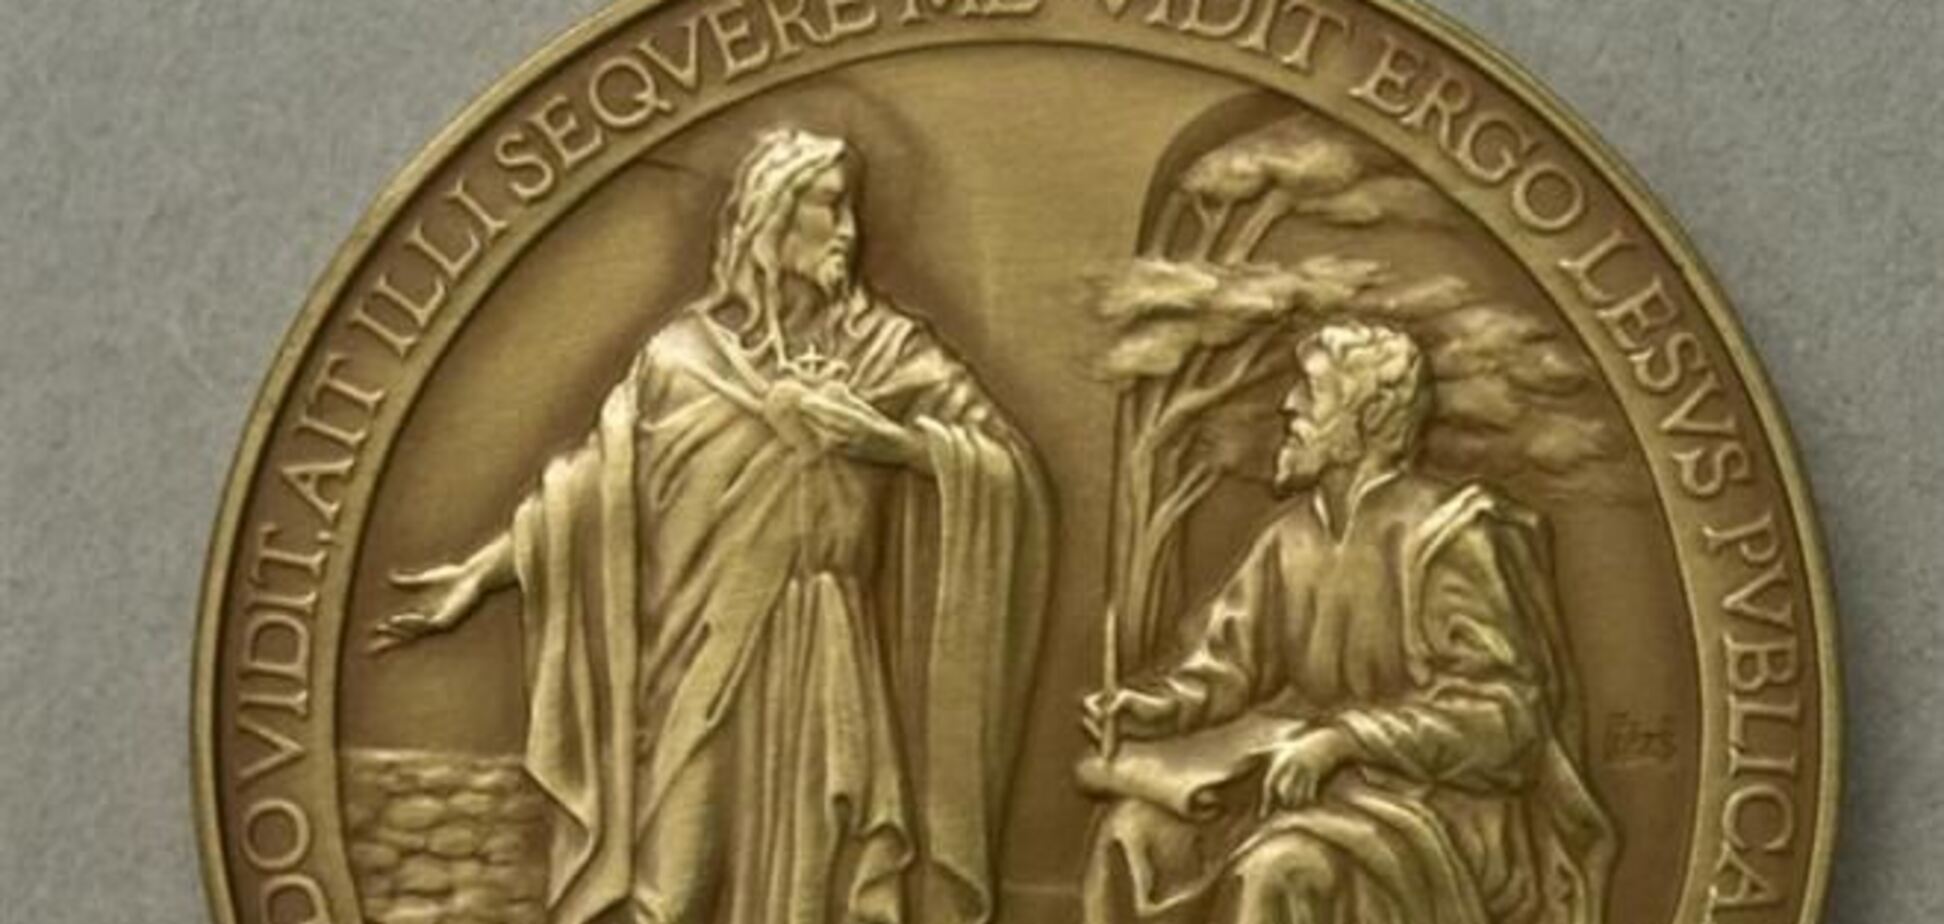 Ватикан опечатался в имени Иисуса на юбилейных монетах